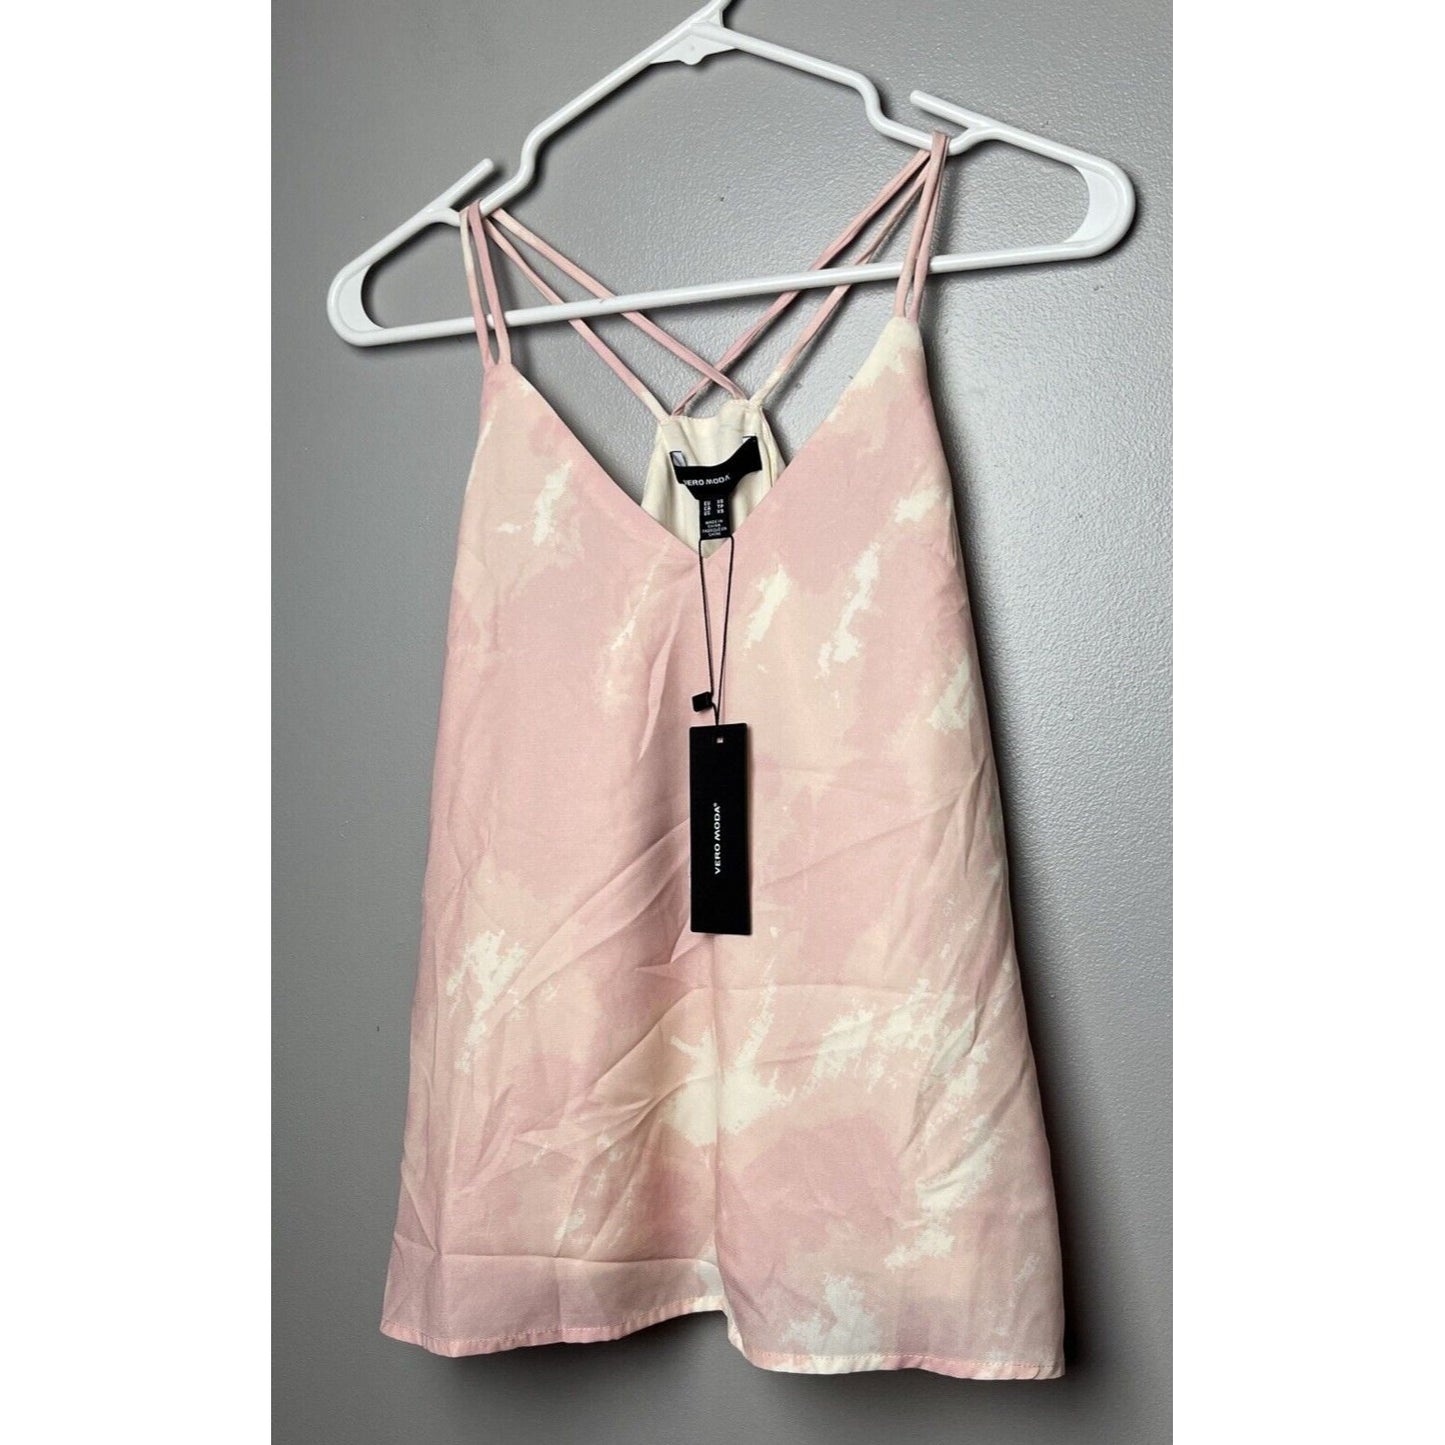 Vero Moda Women's Pink Tie Dyed Sleeveless Criss Cross Back Cami Size: X-Small